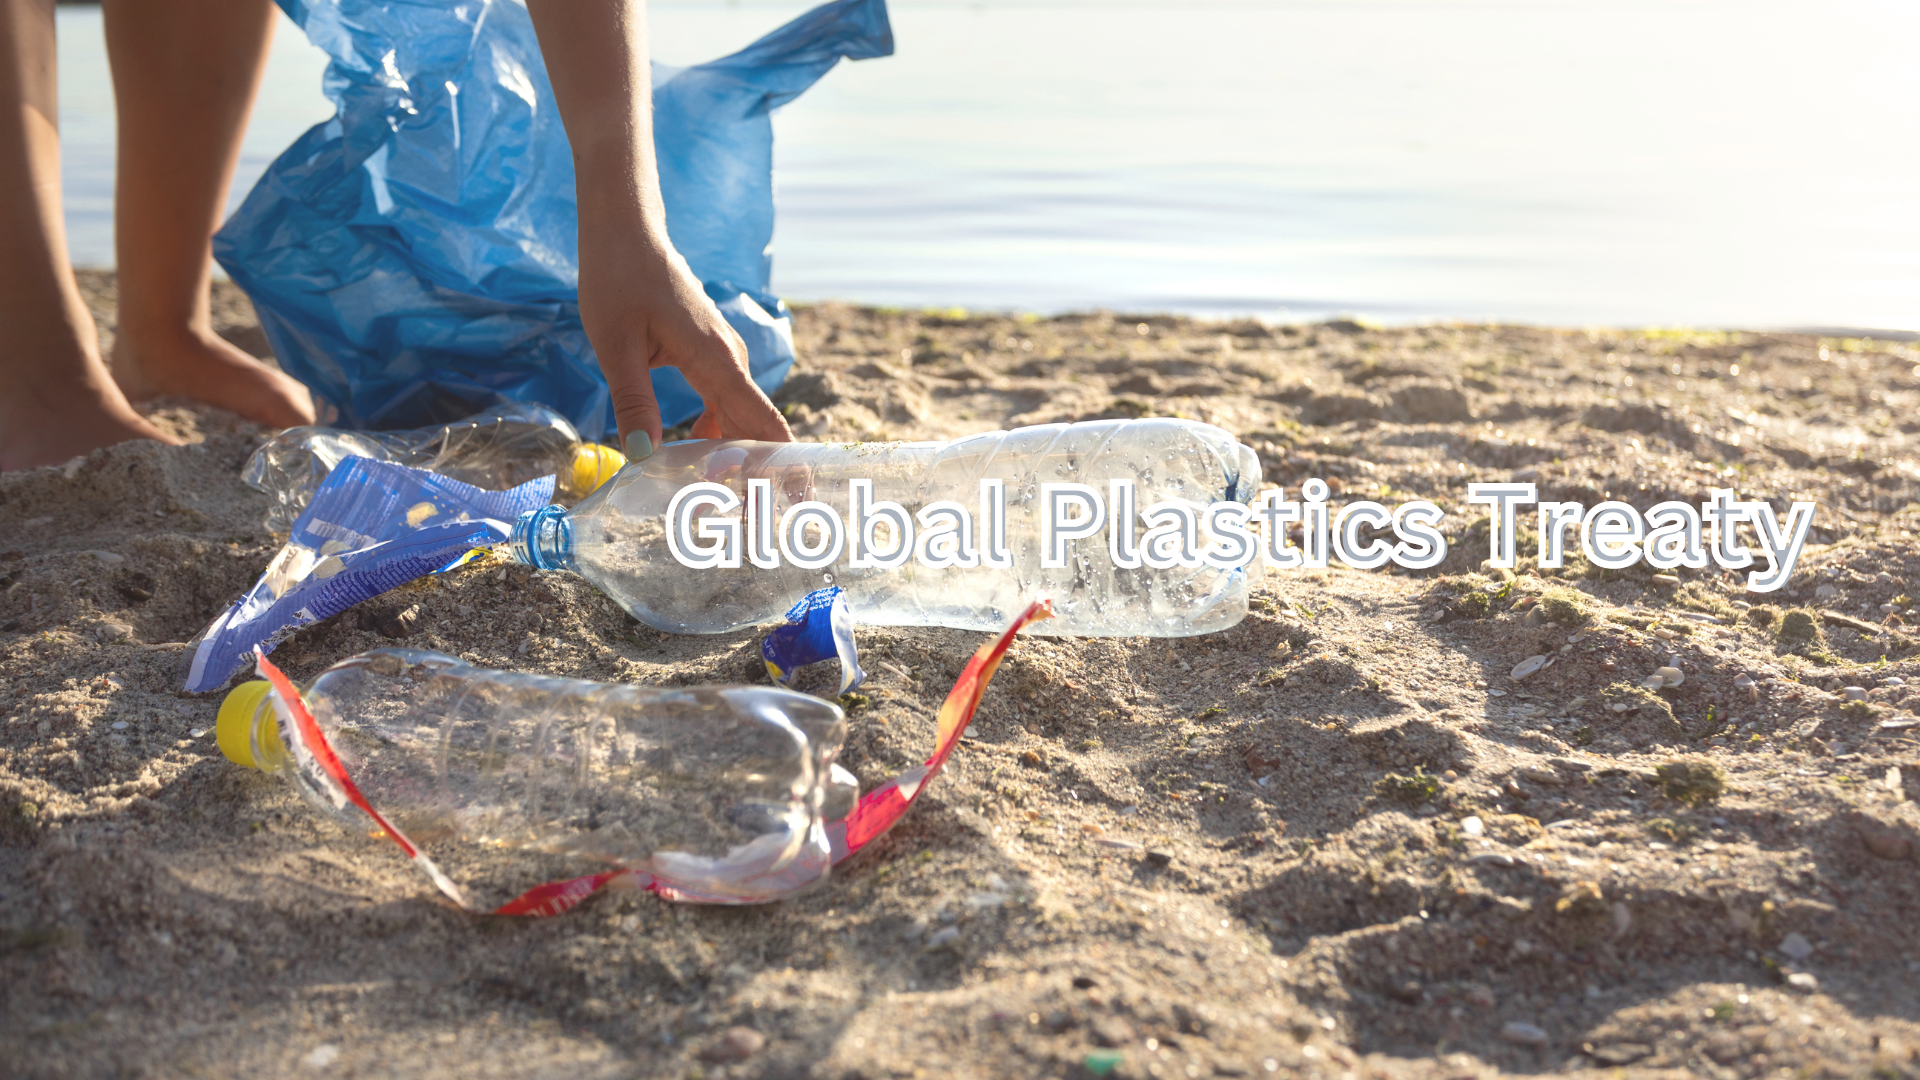 Global Plastics Treaty